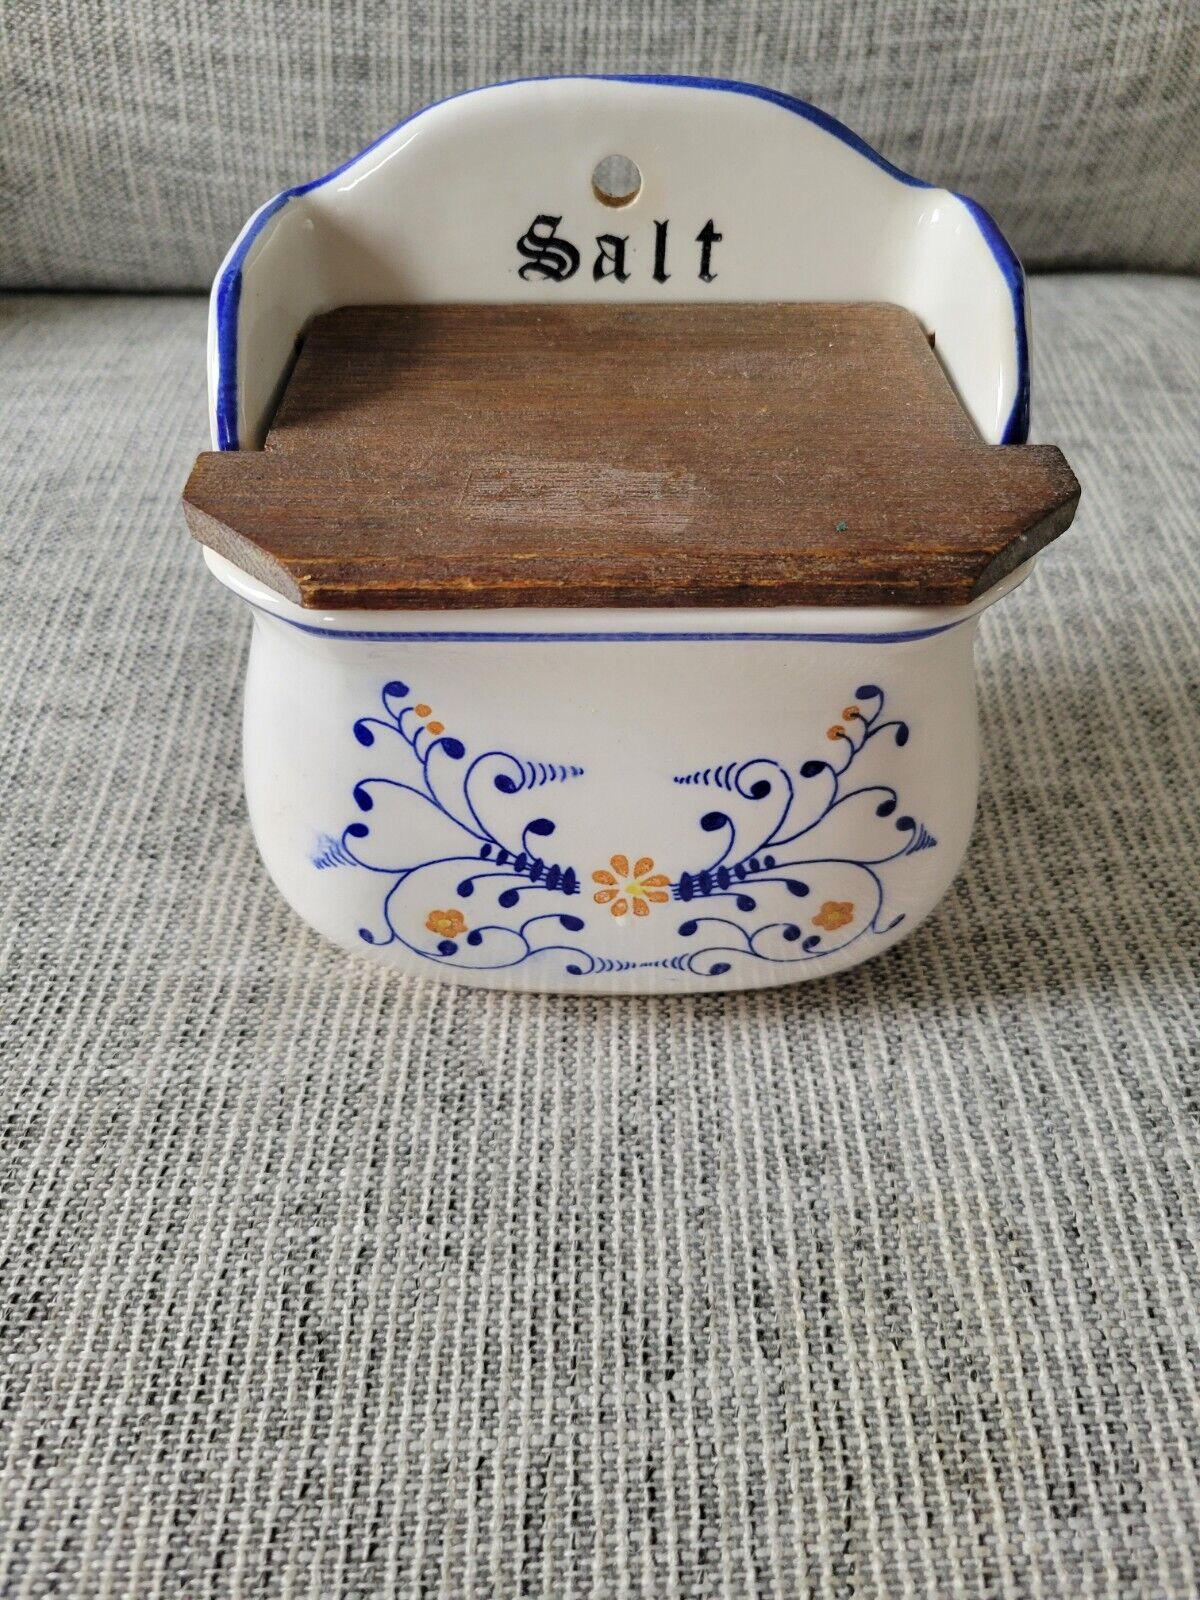 Vintage Salt Box Heritage By Royal Sealy